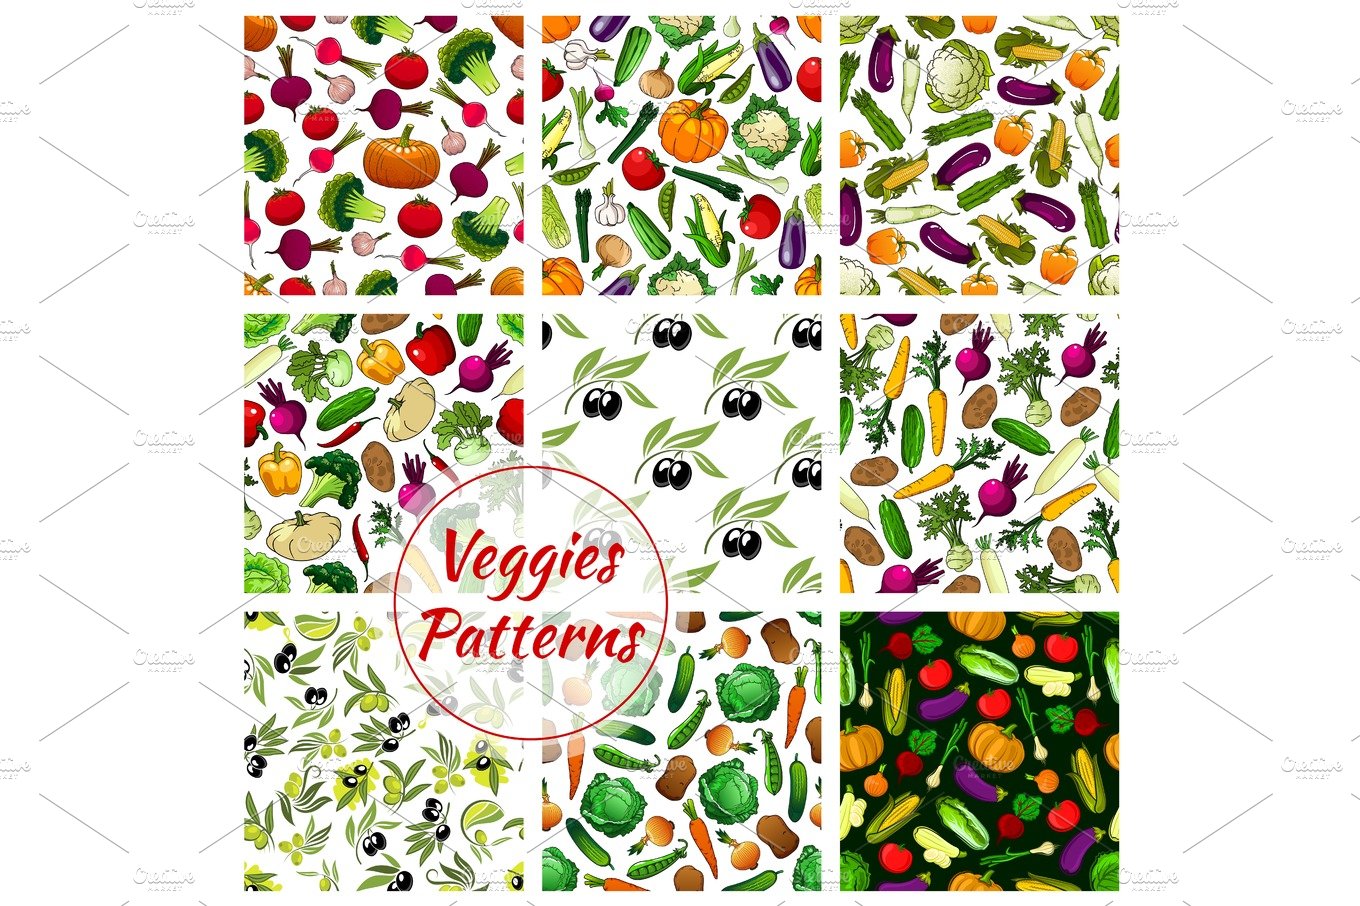 Veggies vegetables seamless patterns set cover image.